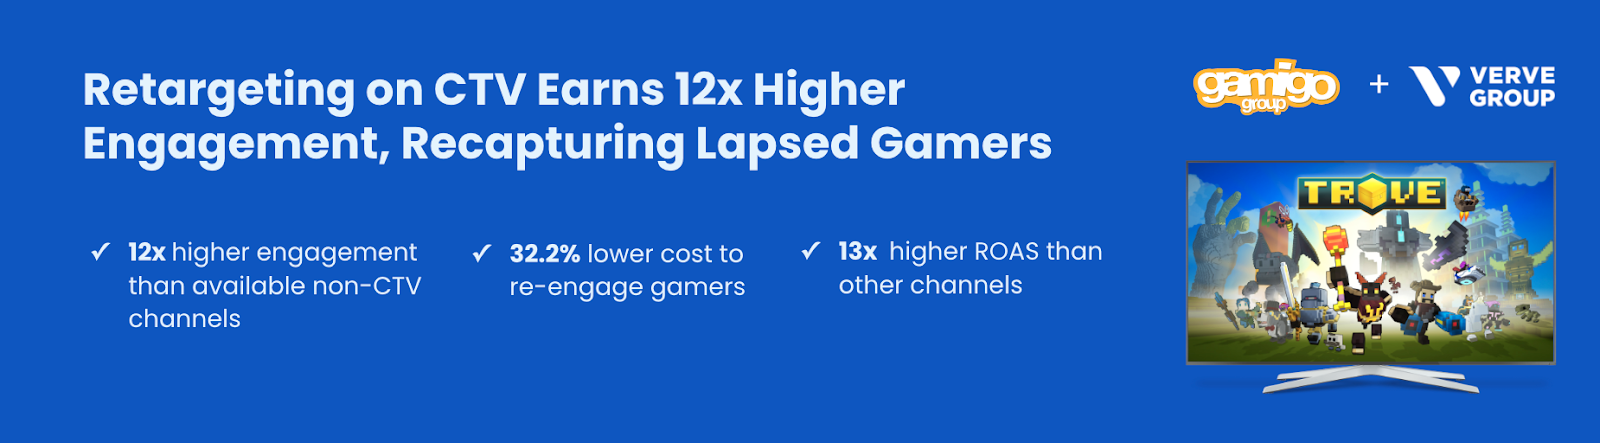 Retargeting on CTV earned 12x higher engagement, recapturing lapsed gamers